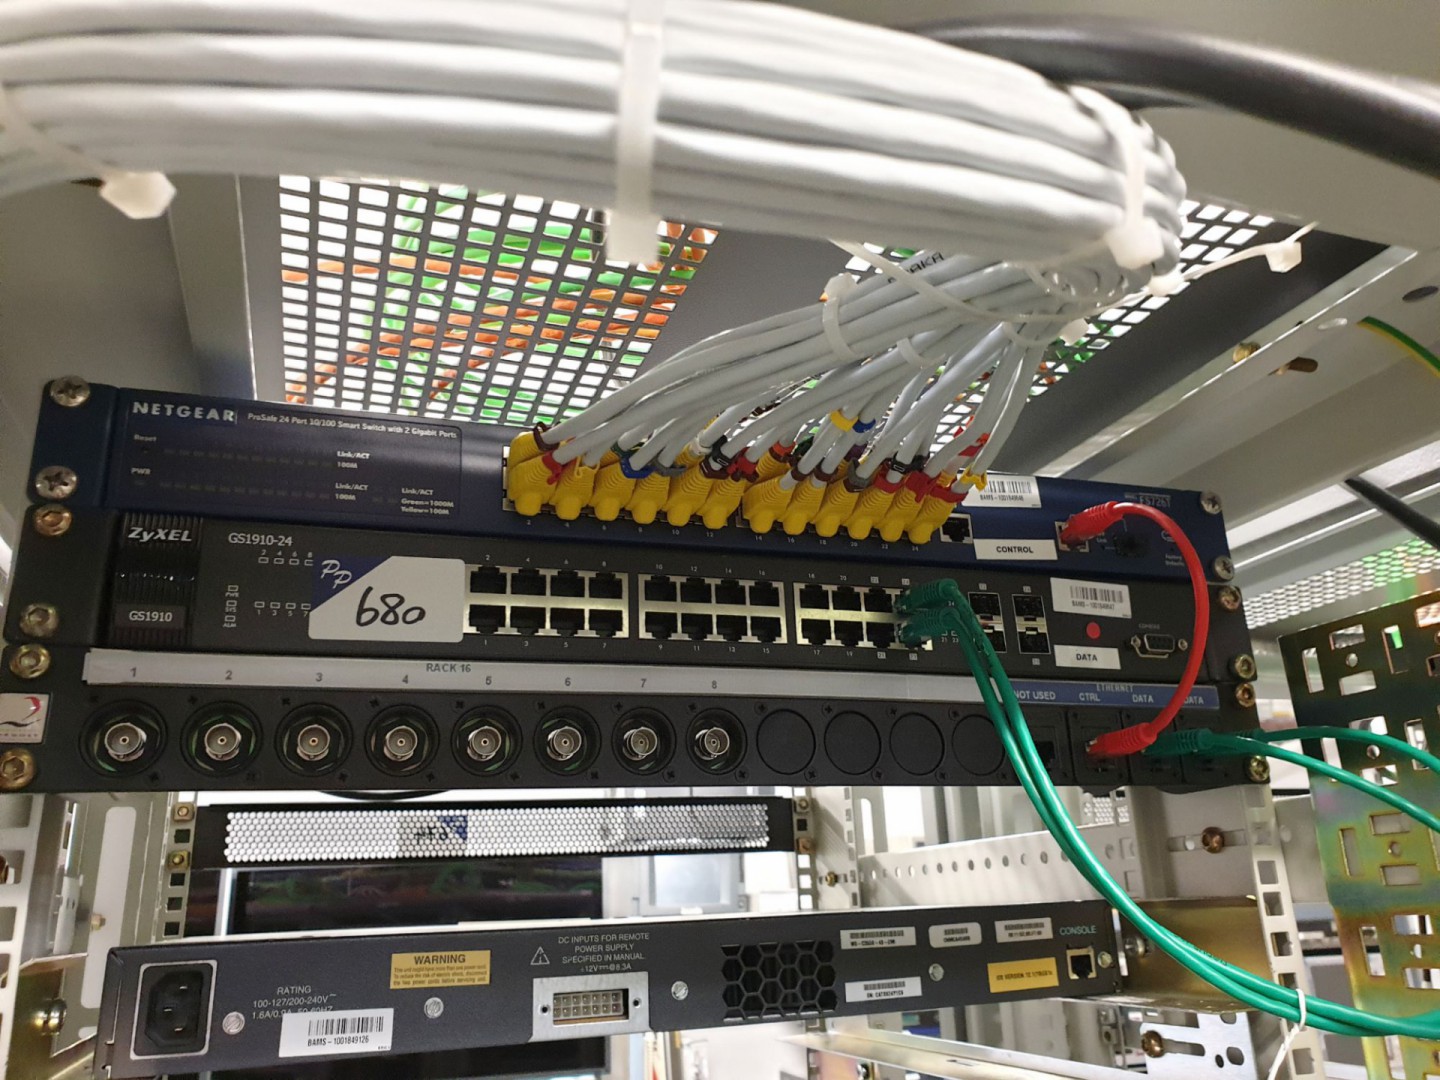 Zyxel GS1910-24 network switch